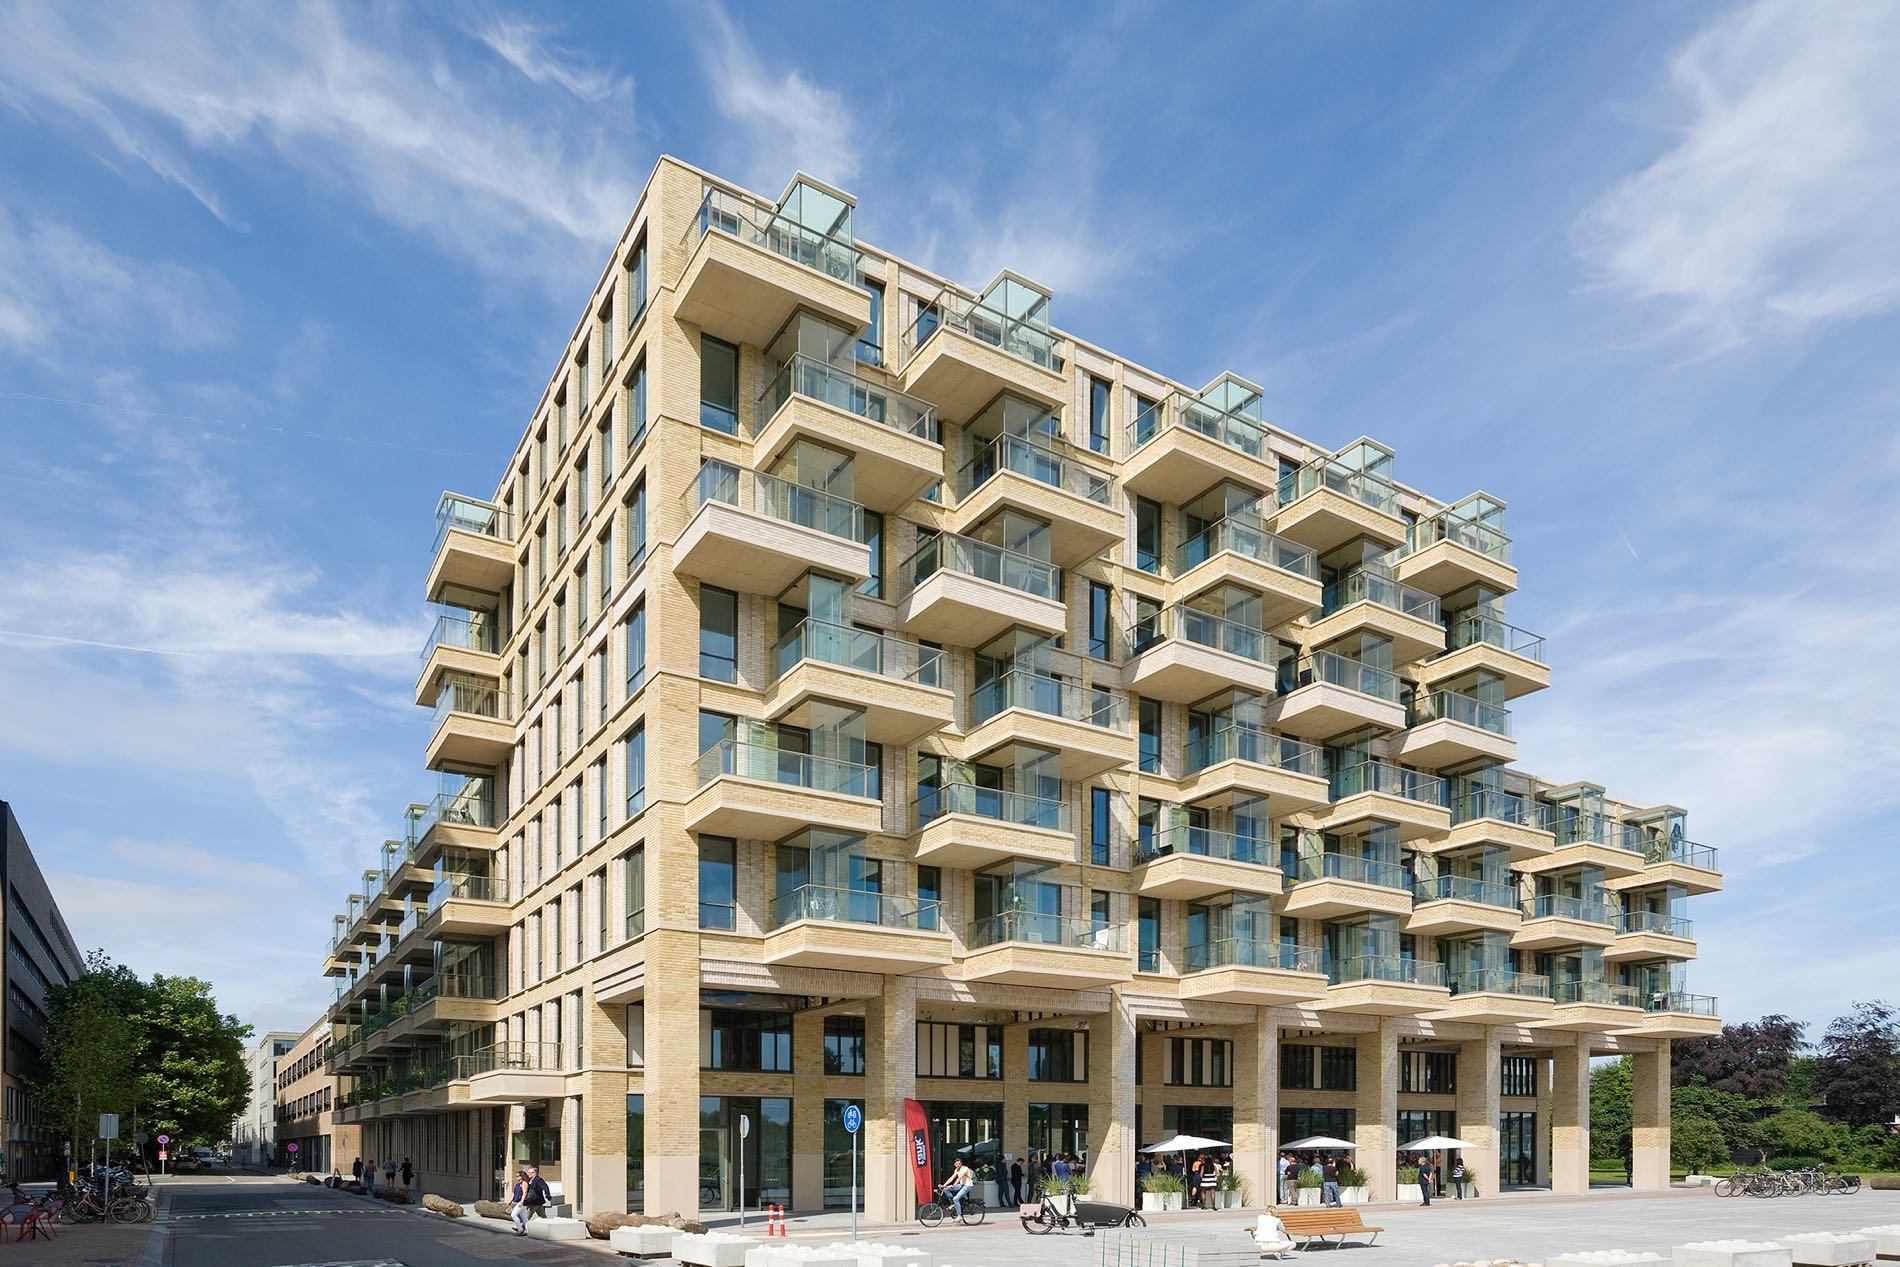 Appartementen Square 2a, Amsterdam - LEVS architecten